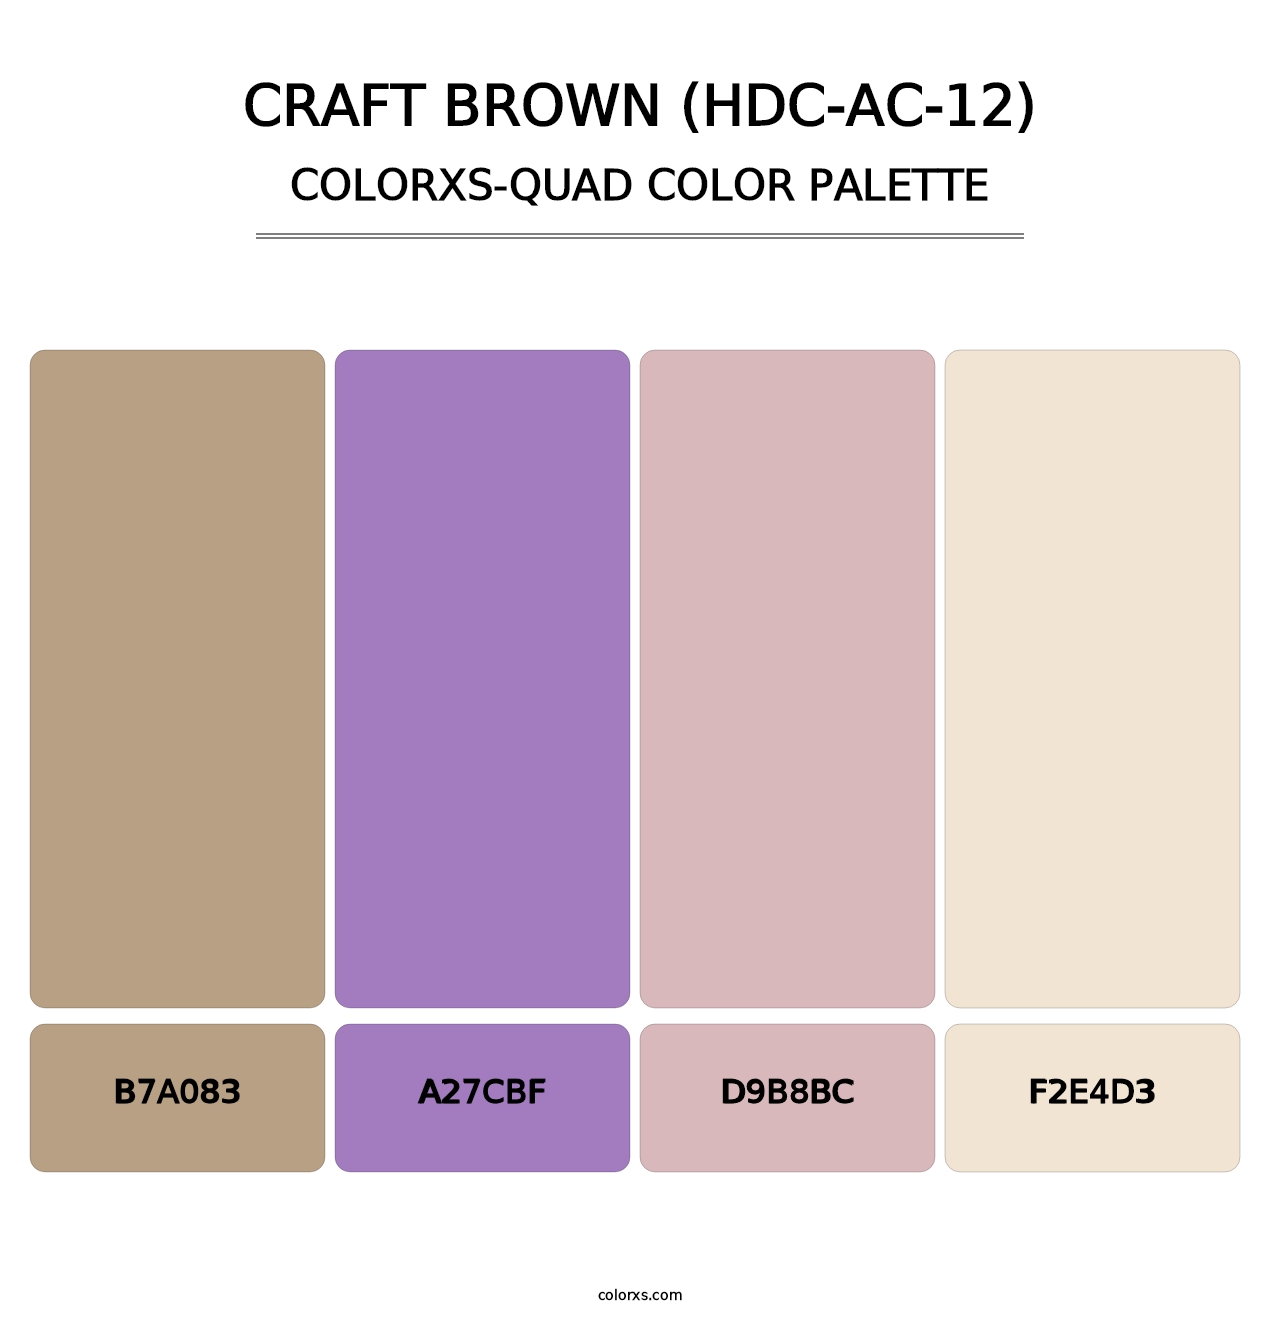 Craft Brown (HDC-AC-12) - Colorxs Quad Palette